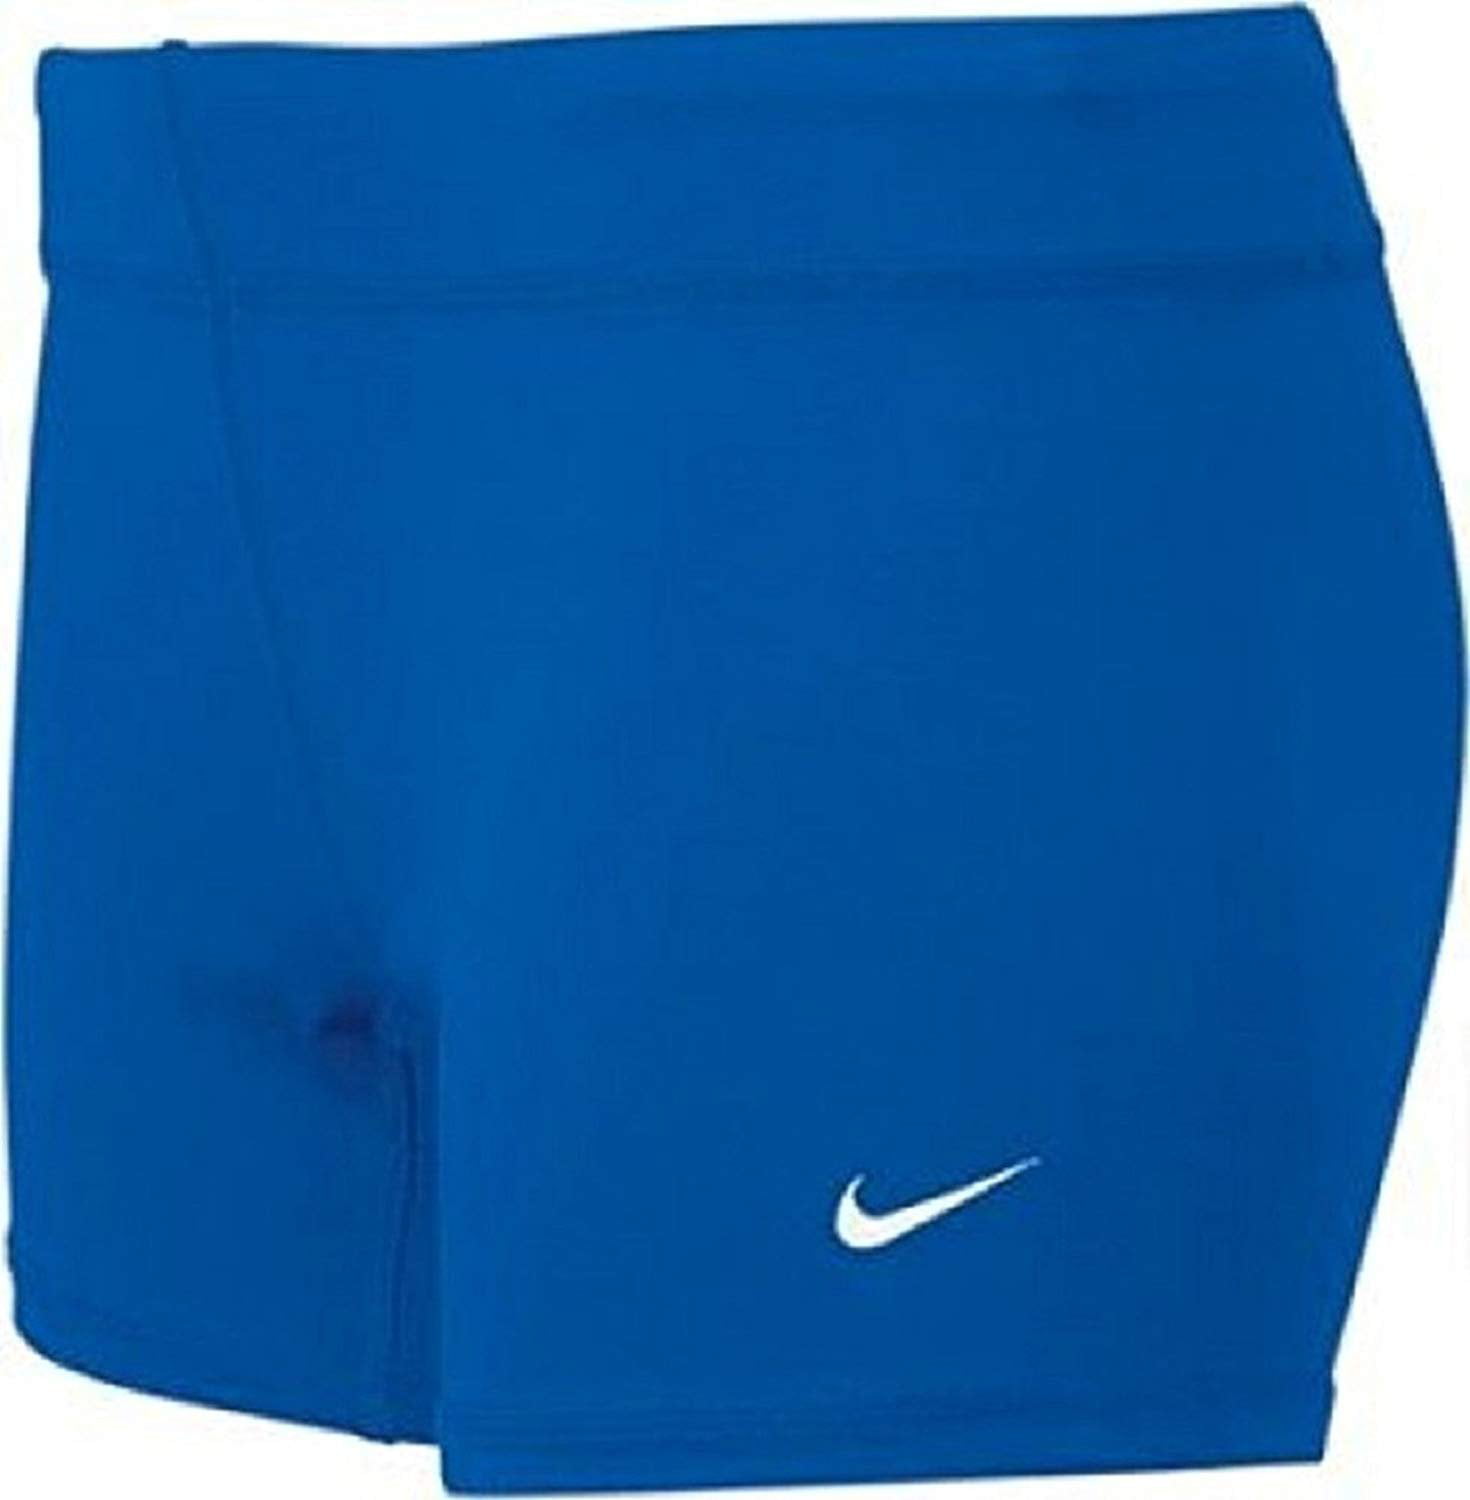 Soviet What Inflates Nike Performance Women's Volleyball Game Shorts Medium, Royal - Walmart.com